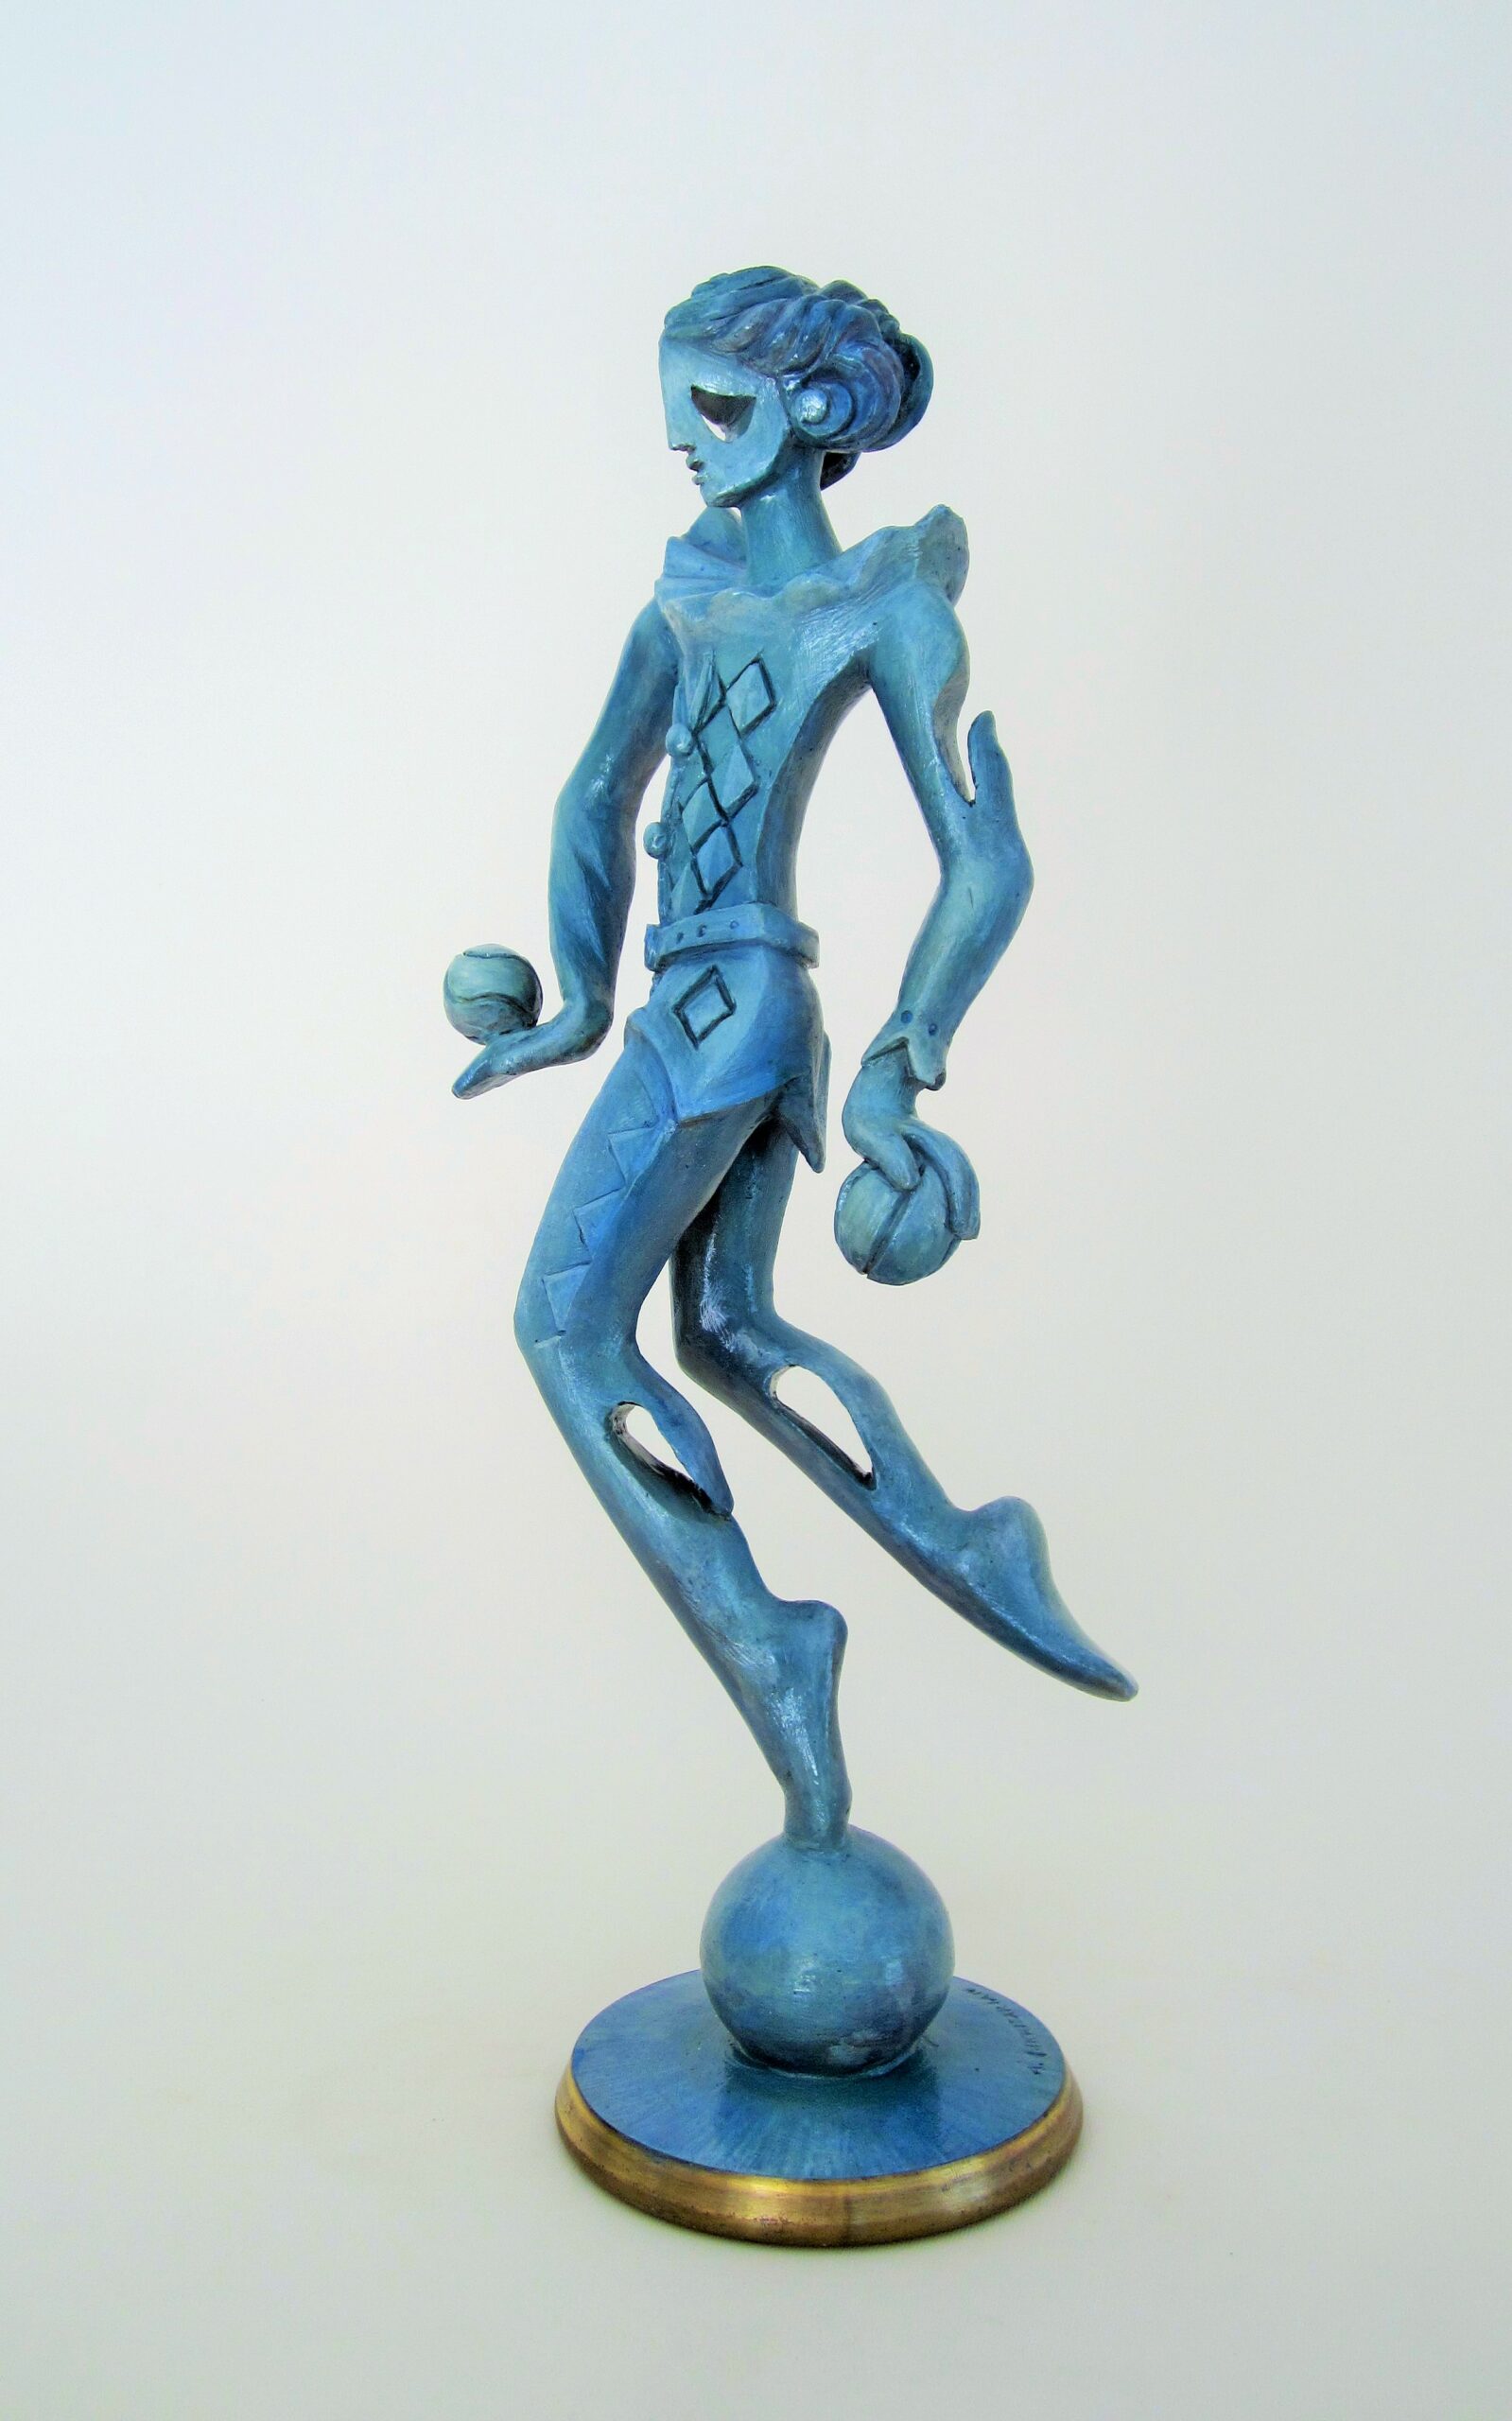 Arlequin jongleur</p>
<p>Taille : 22*32*19 cm     Matière : Bronze